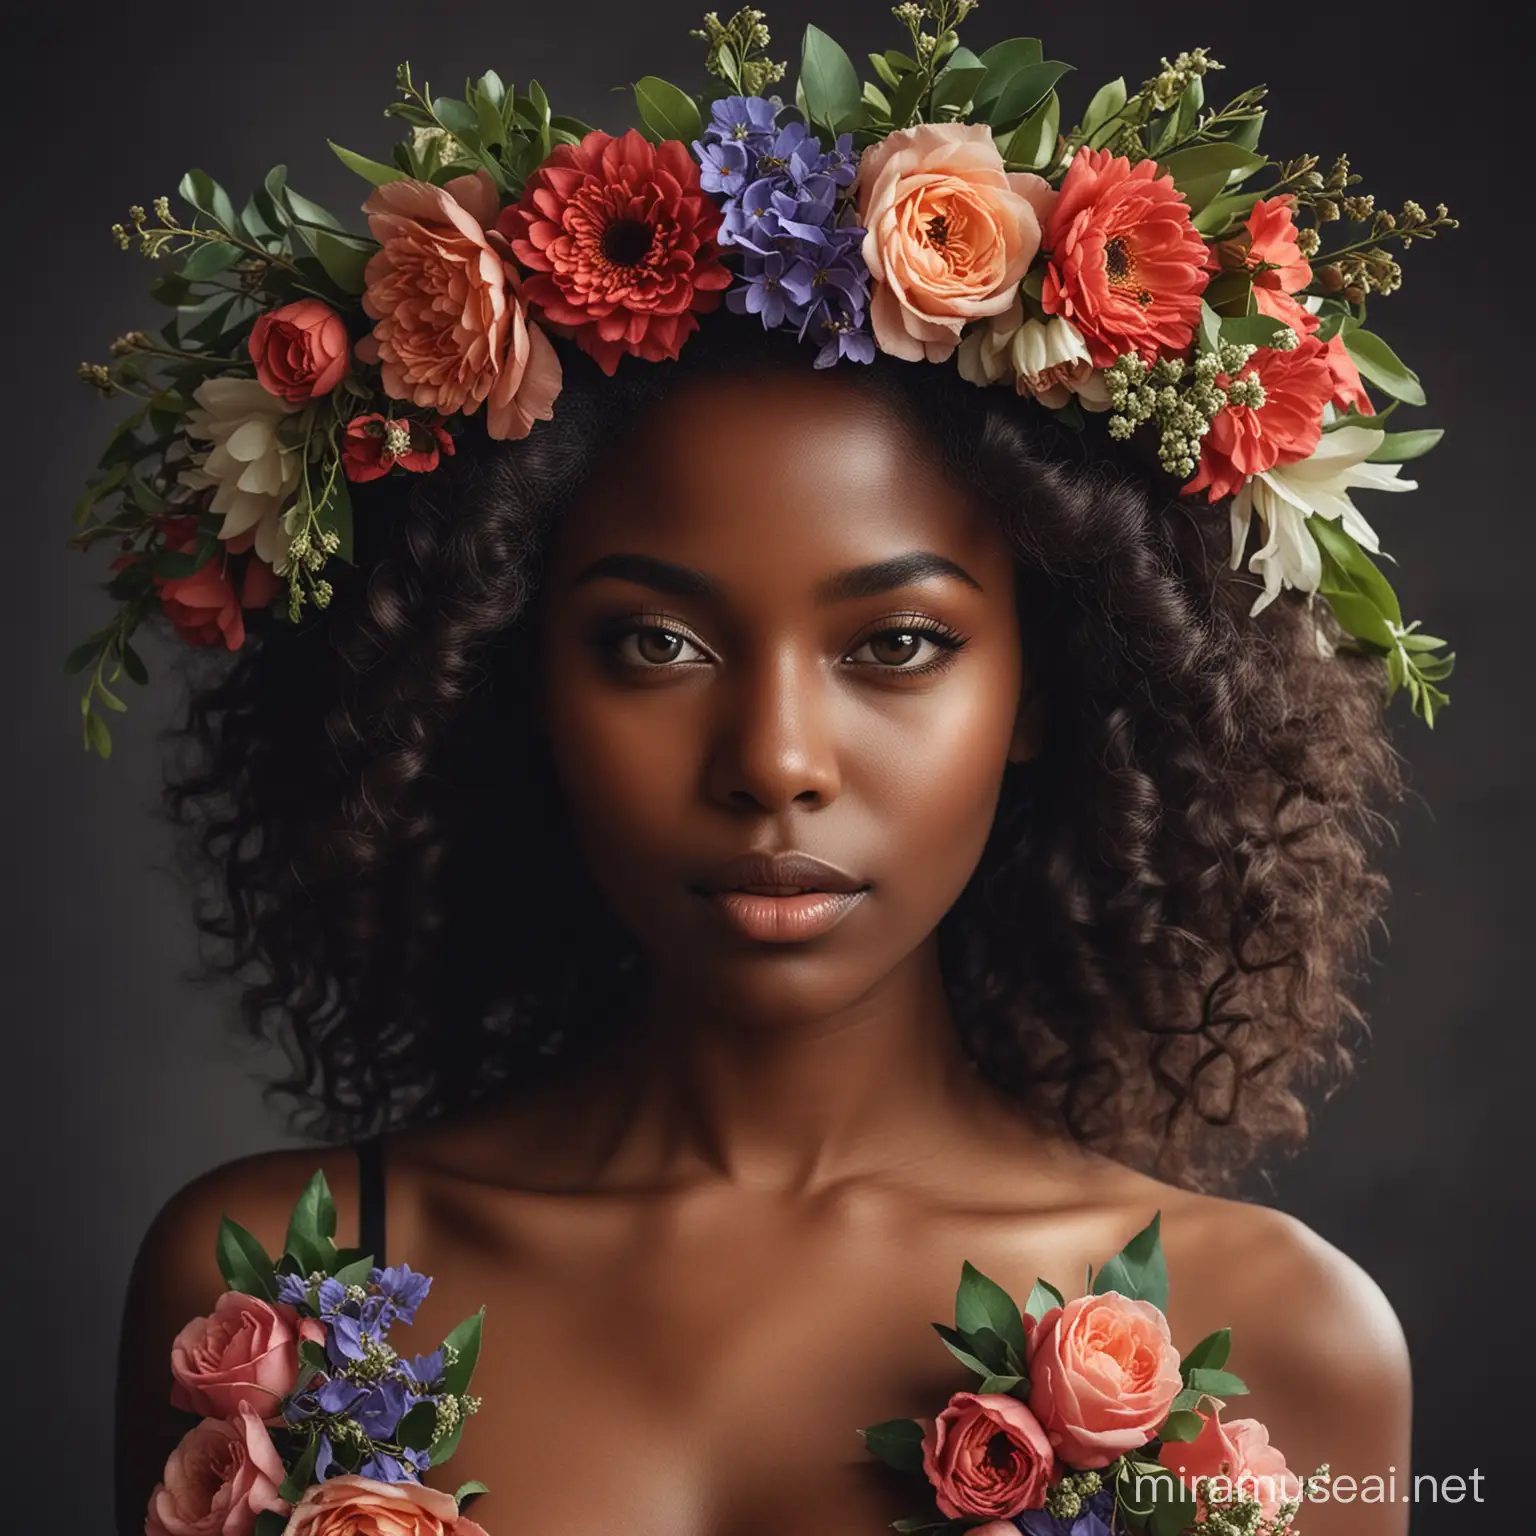 Sensual Portrait DarkSkinned Girl Adorned with Flower Wreath